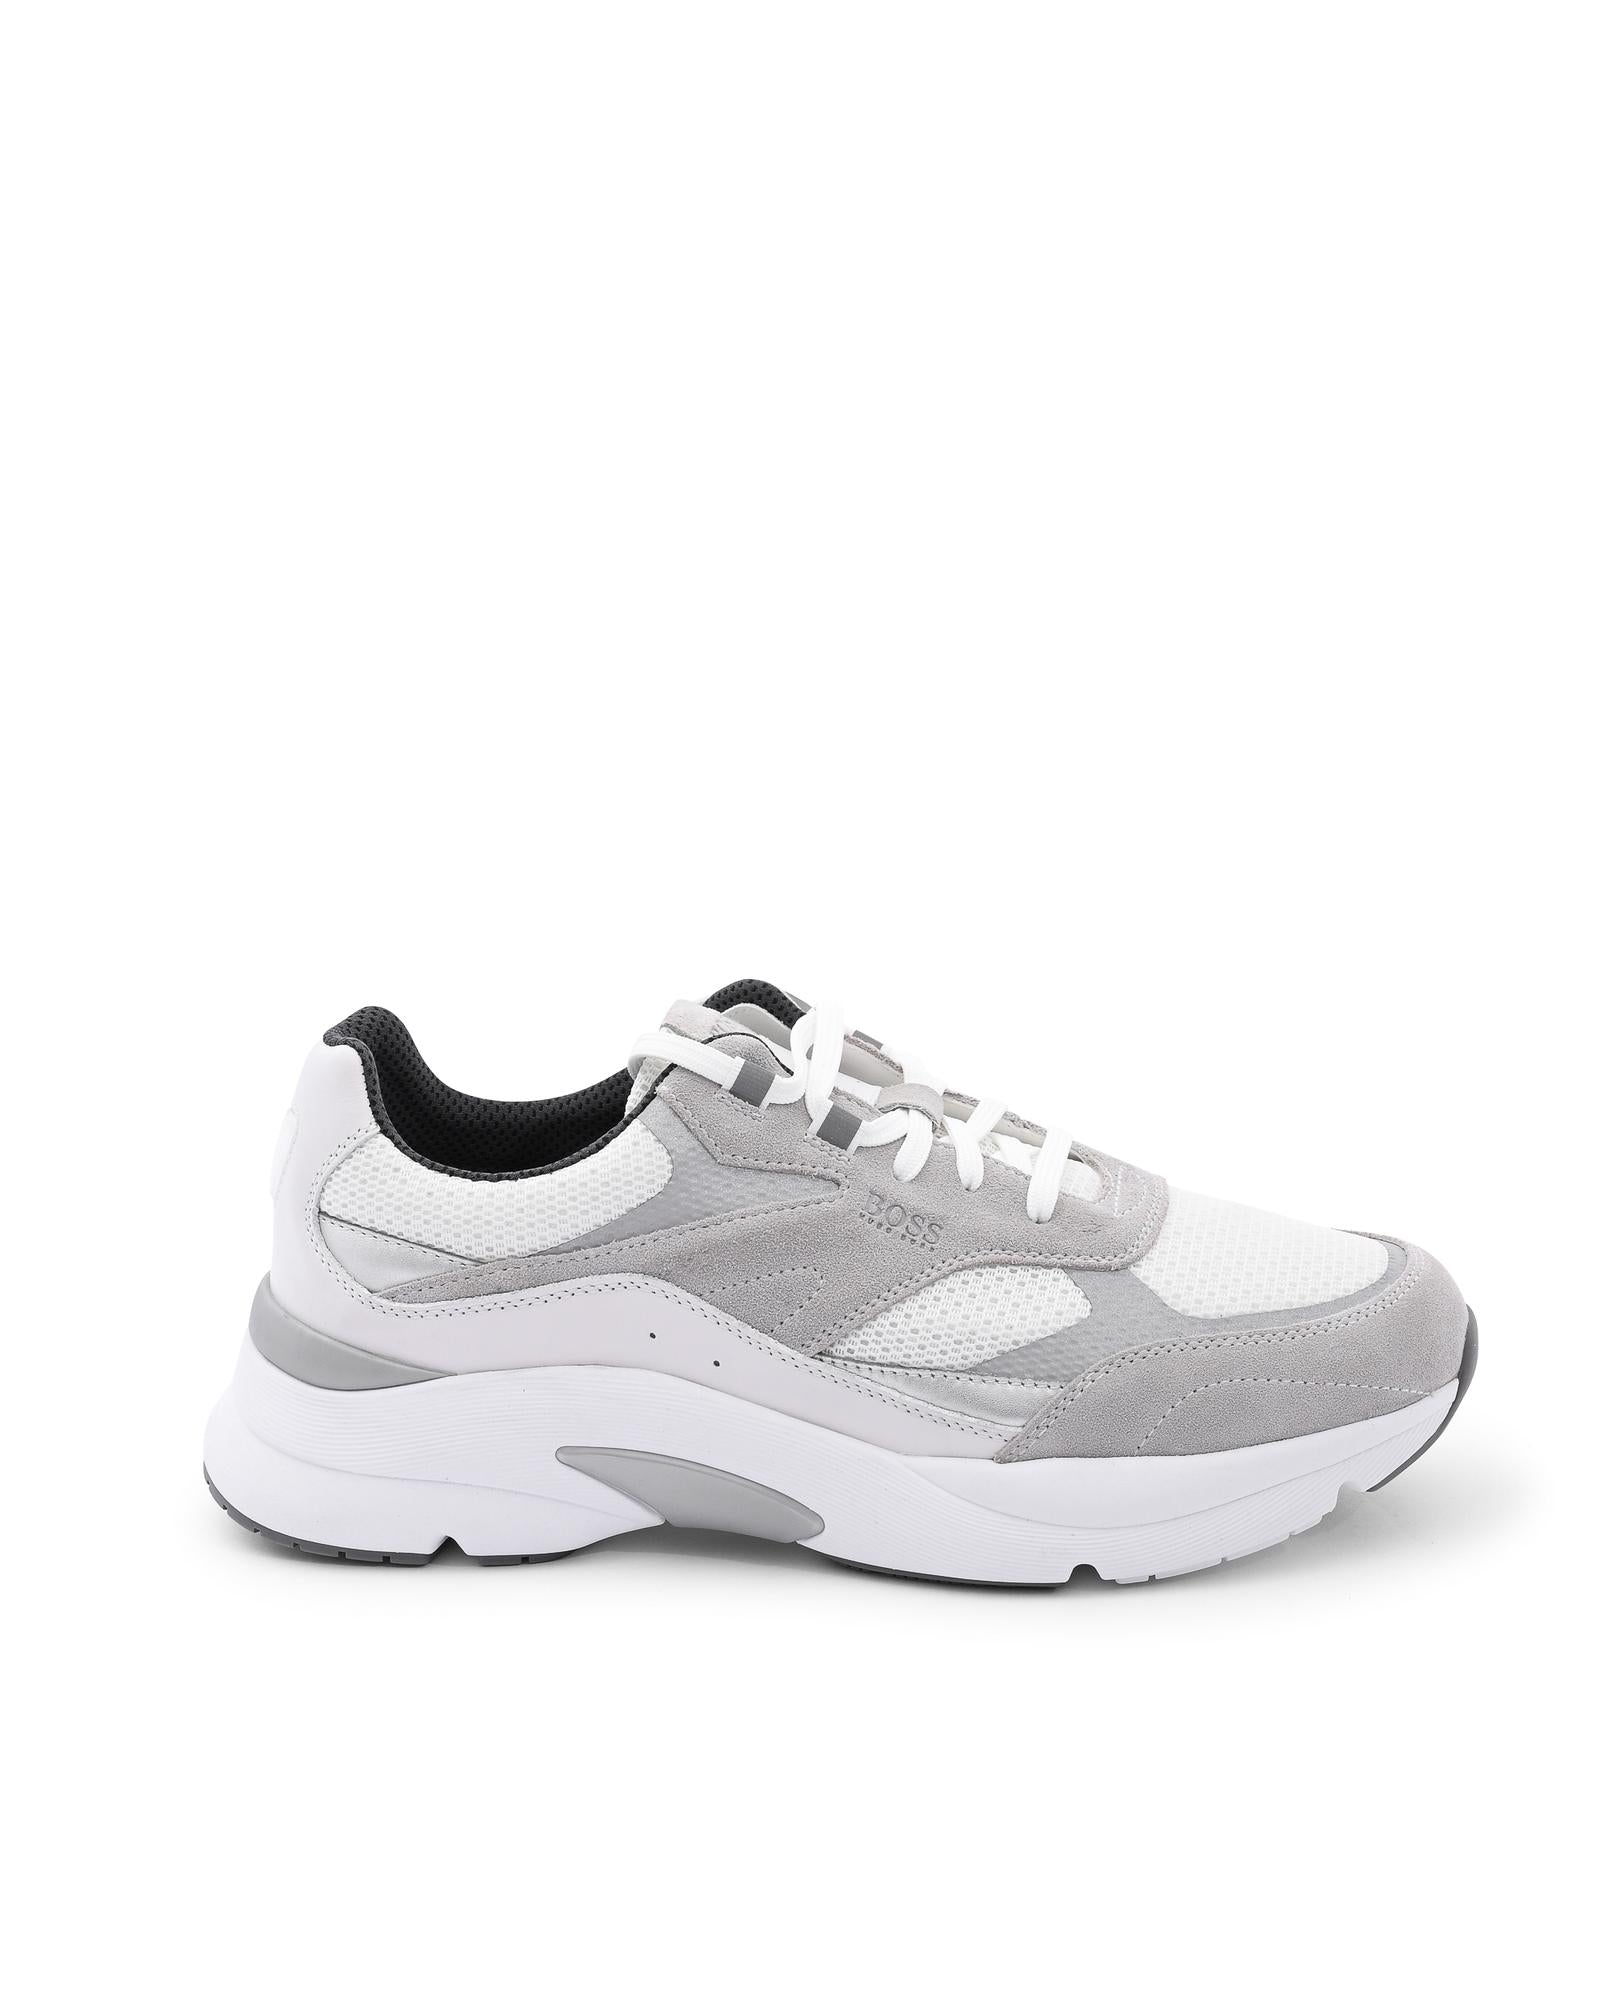 Men's White Leather Sneakers in White - 42 EU